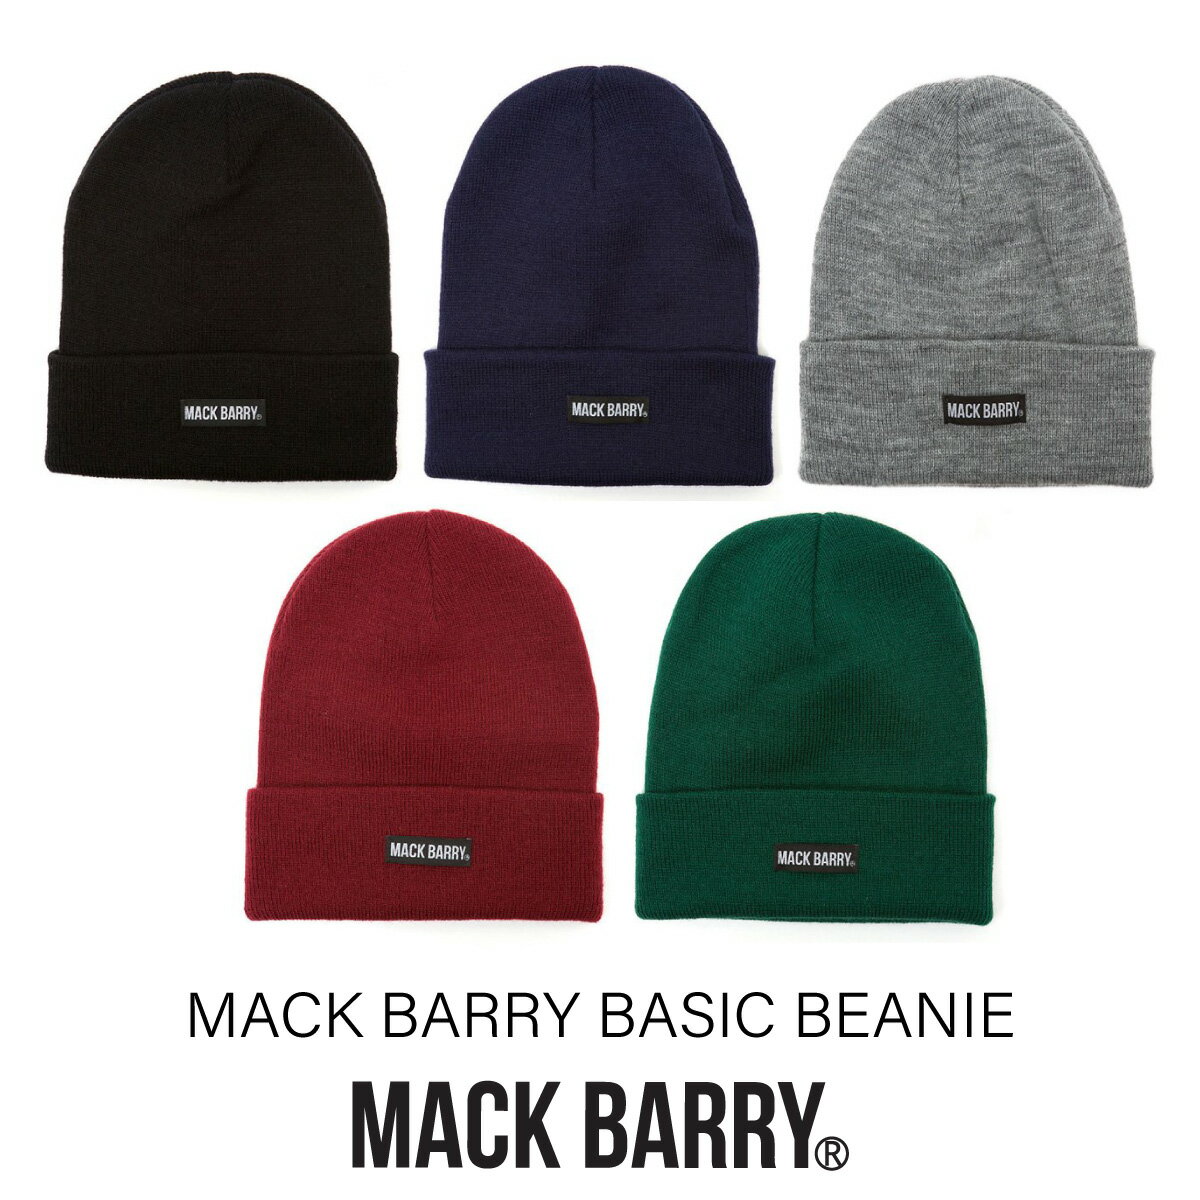 MACK BARRY BASIC BEANIE ブラック ネイビー ワイン グリーン グレー ニット帽 ニットキャップ レディース uv UV 対策 大きいサイズ アウトドア キャンプ 防寒 帽子 おしゃれ オシャレ メンズ マクバリー